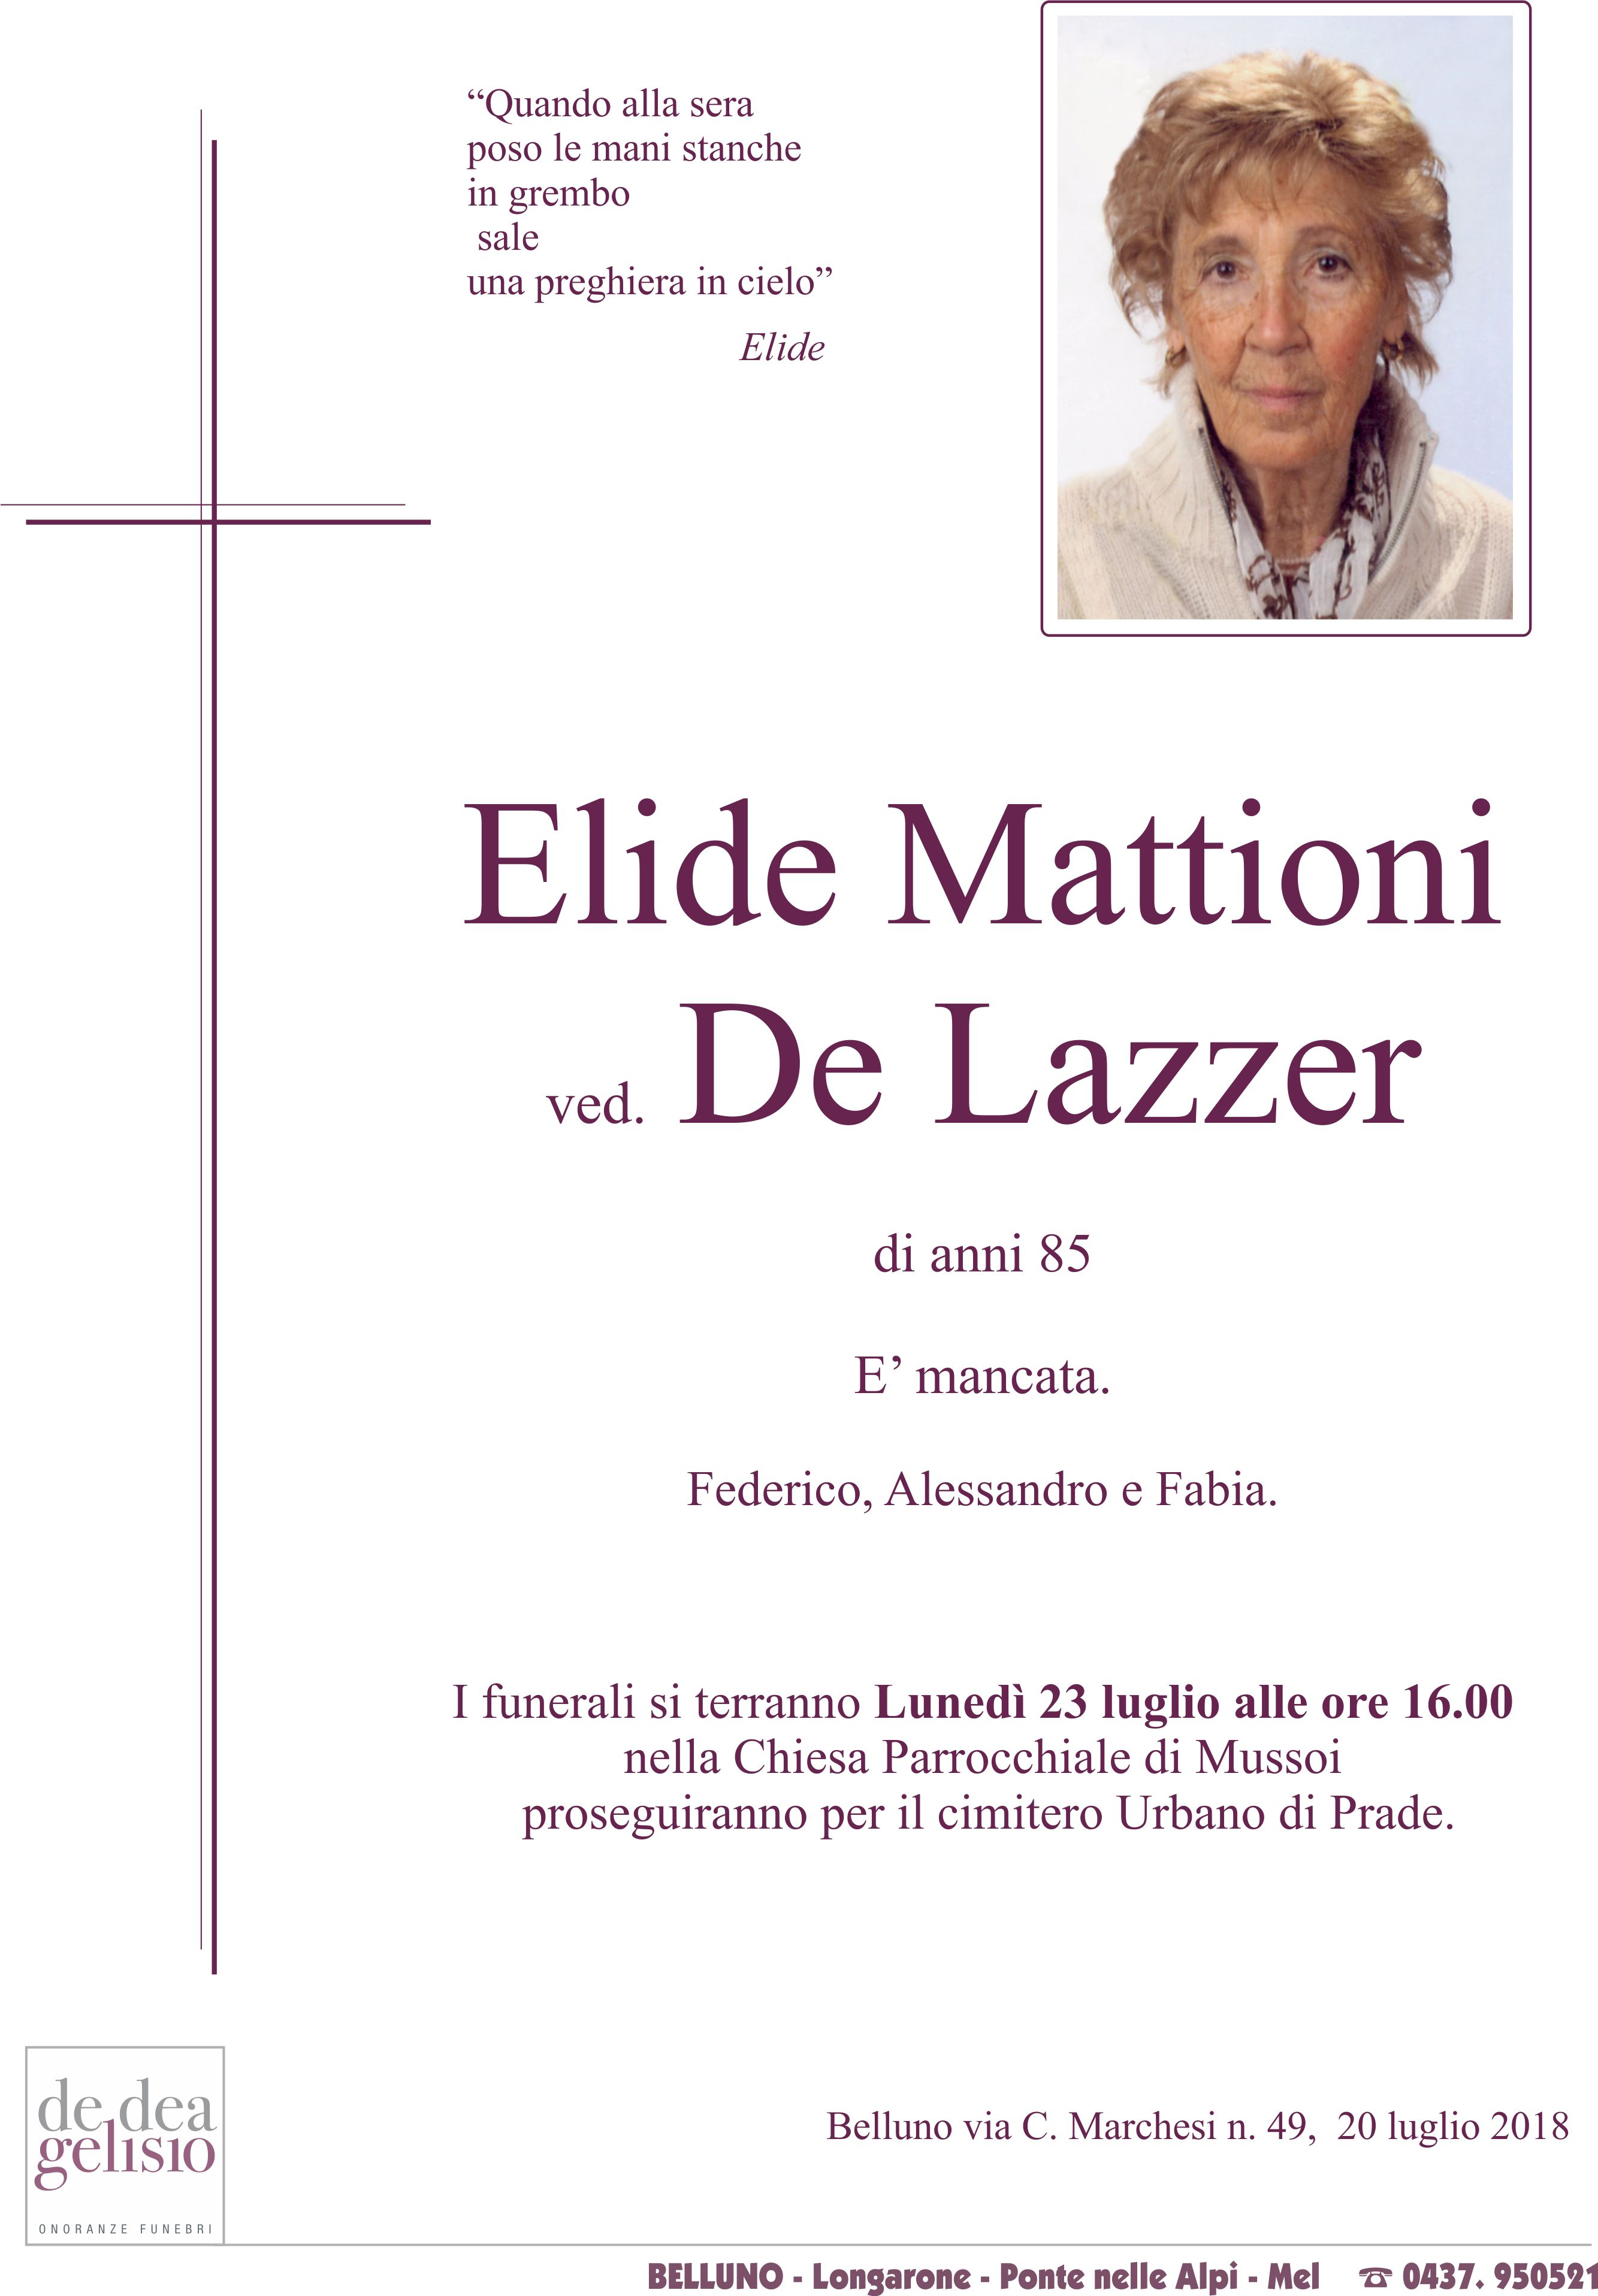 Mattioni Elide